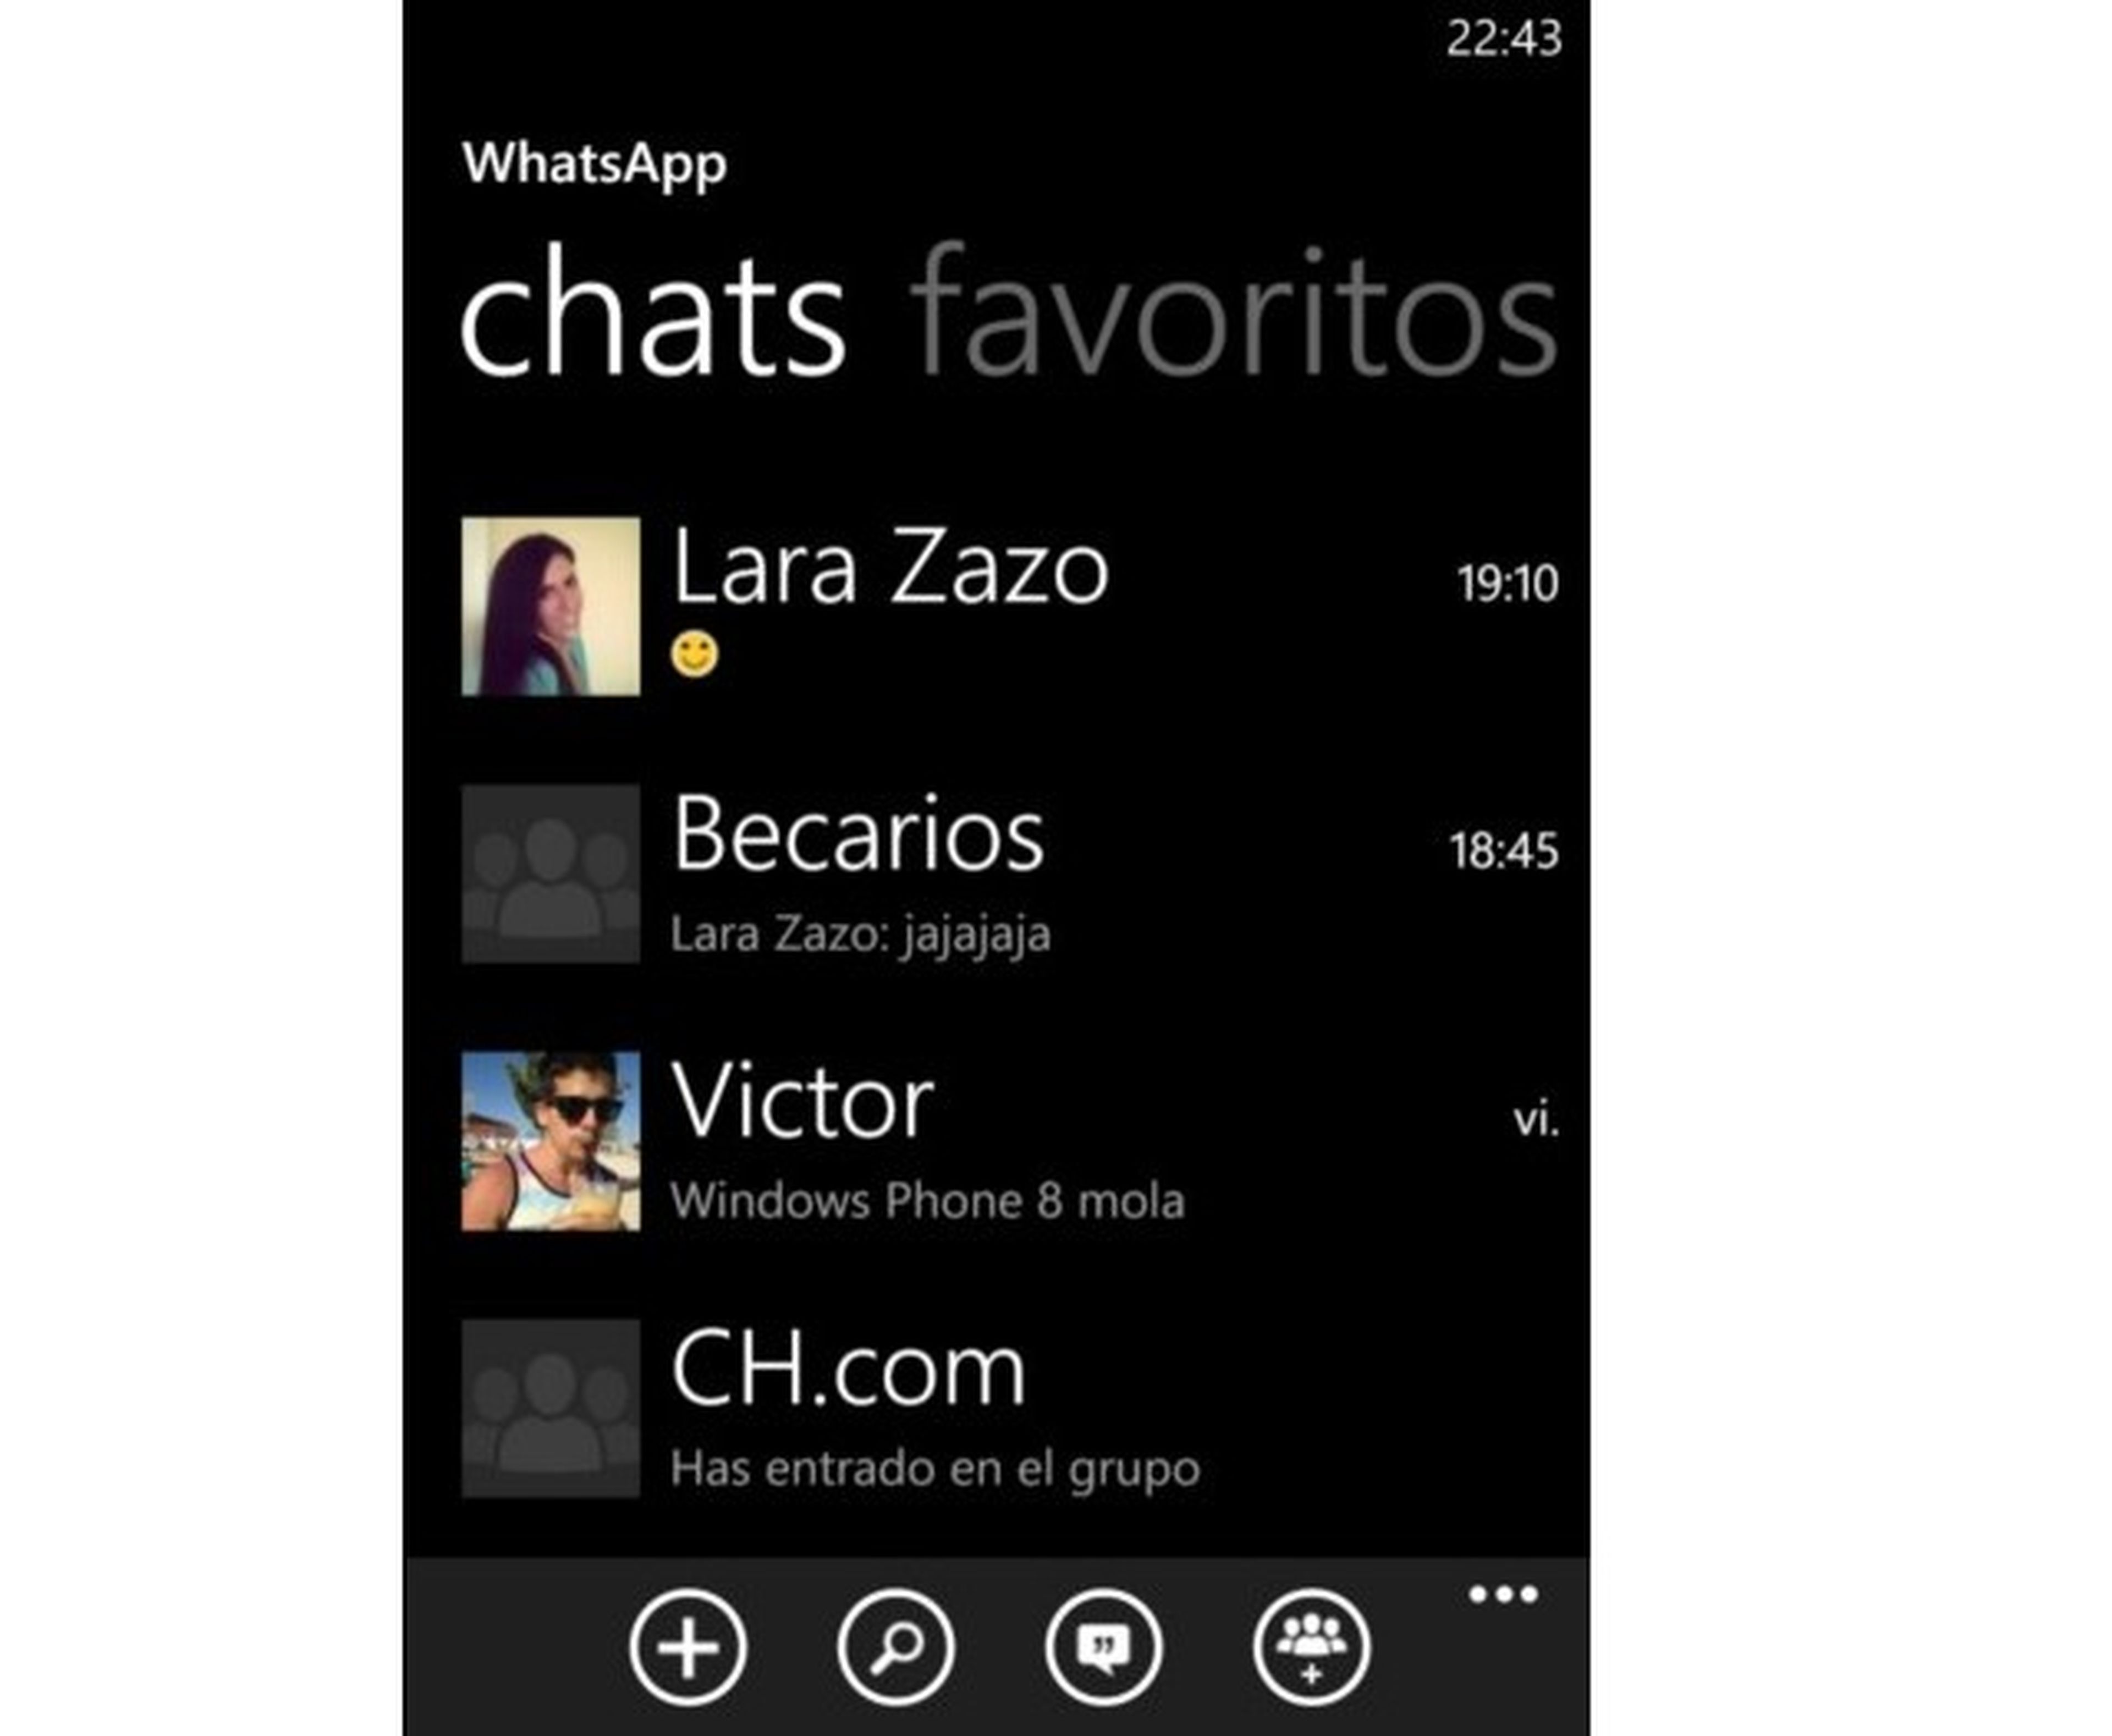 whatsapp app windows phone